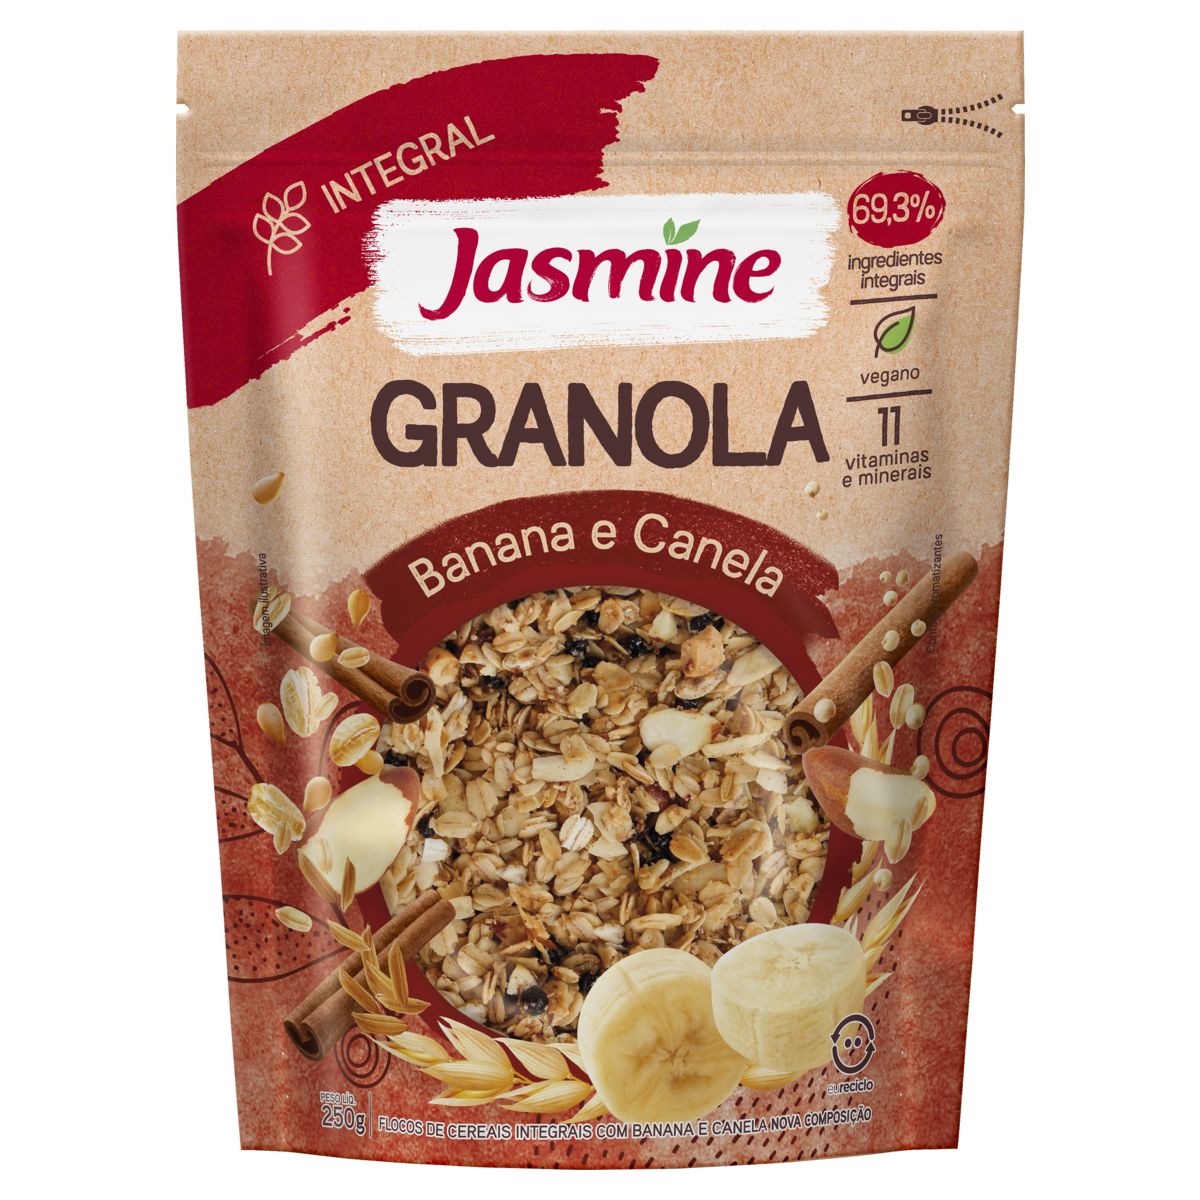 Granola Jasmine Banana e Canela 69,3% Integral Pouch 250g